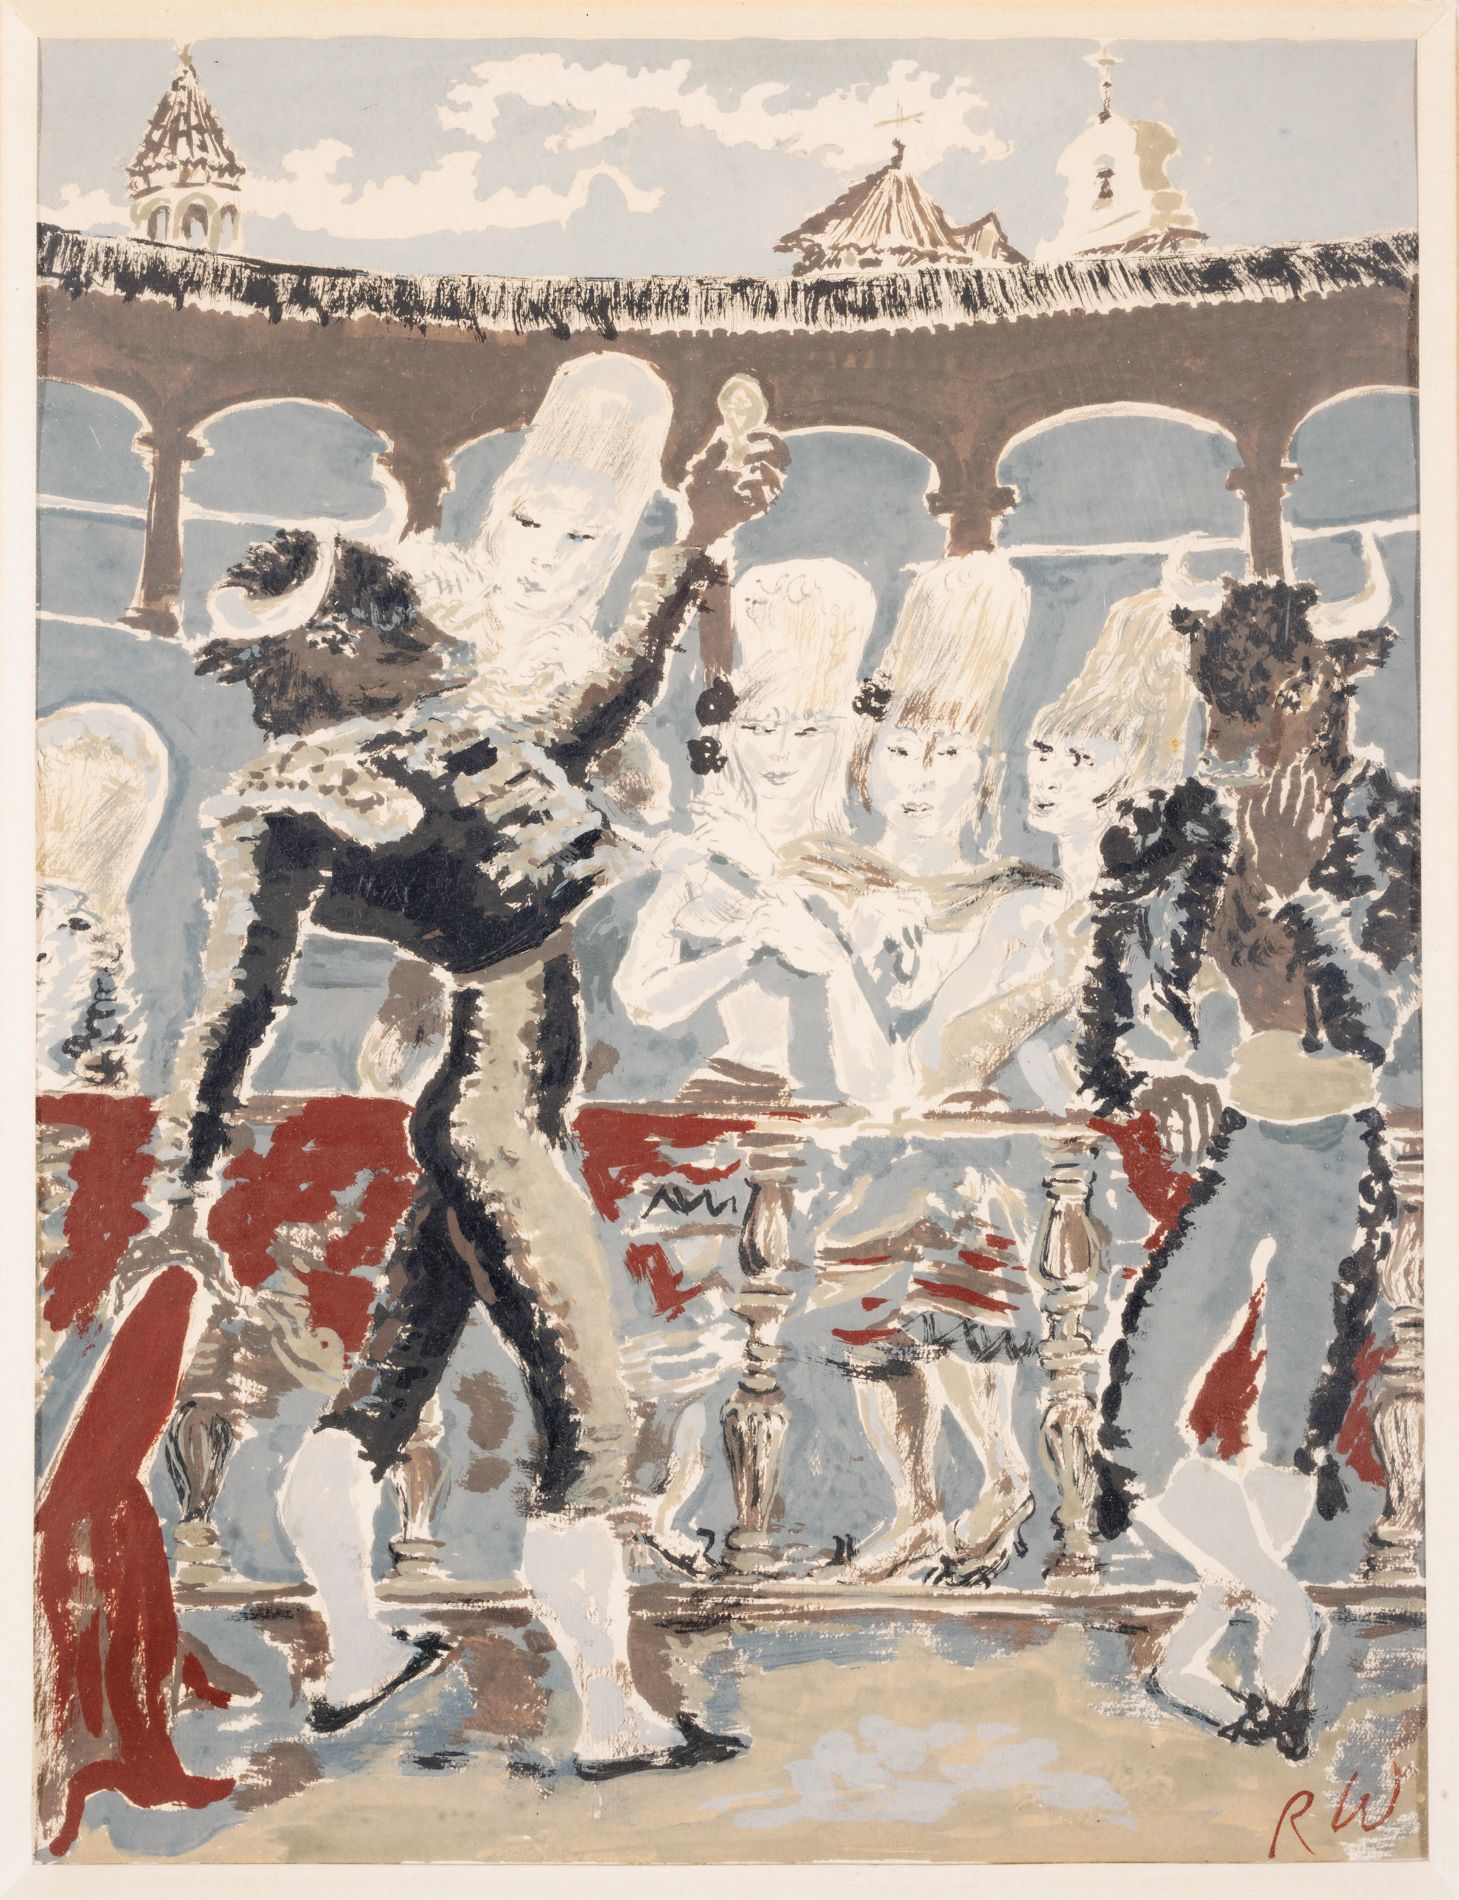 Null 罗杰-威尔德(1894-1987)
球 
水墨和水粉画，右下角有文字说明。 
尺寸：29 x 22 cm (视图)